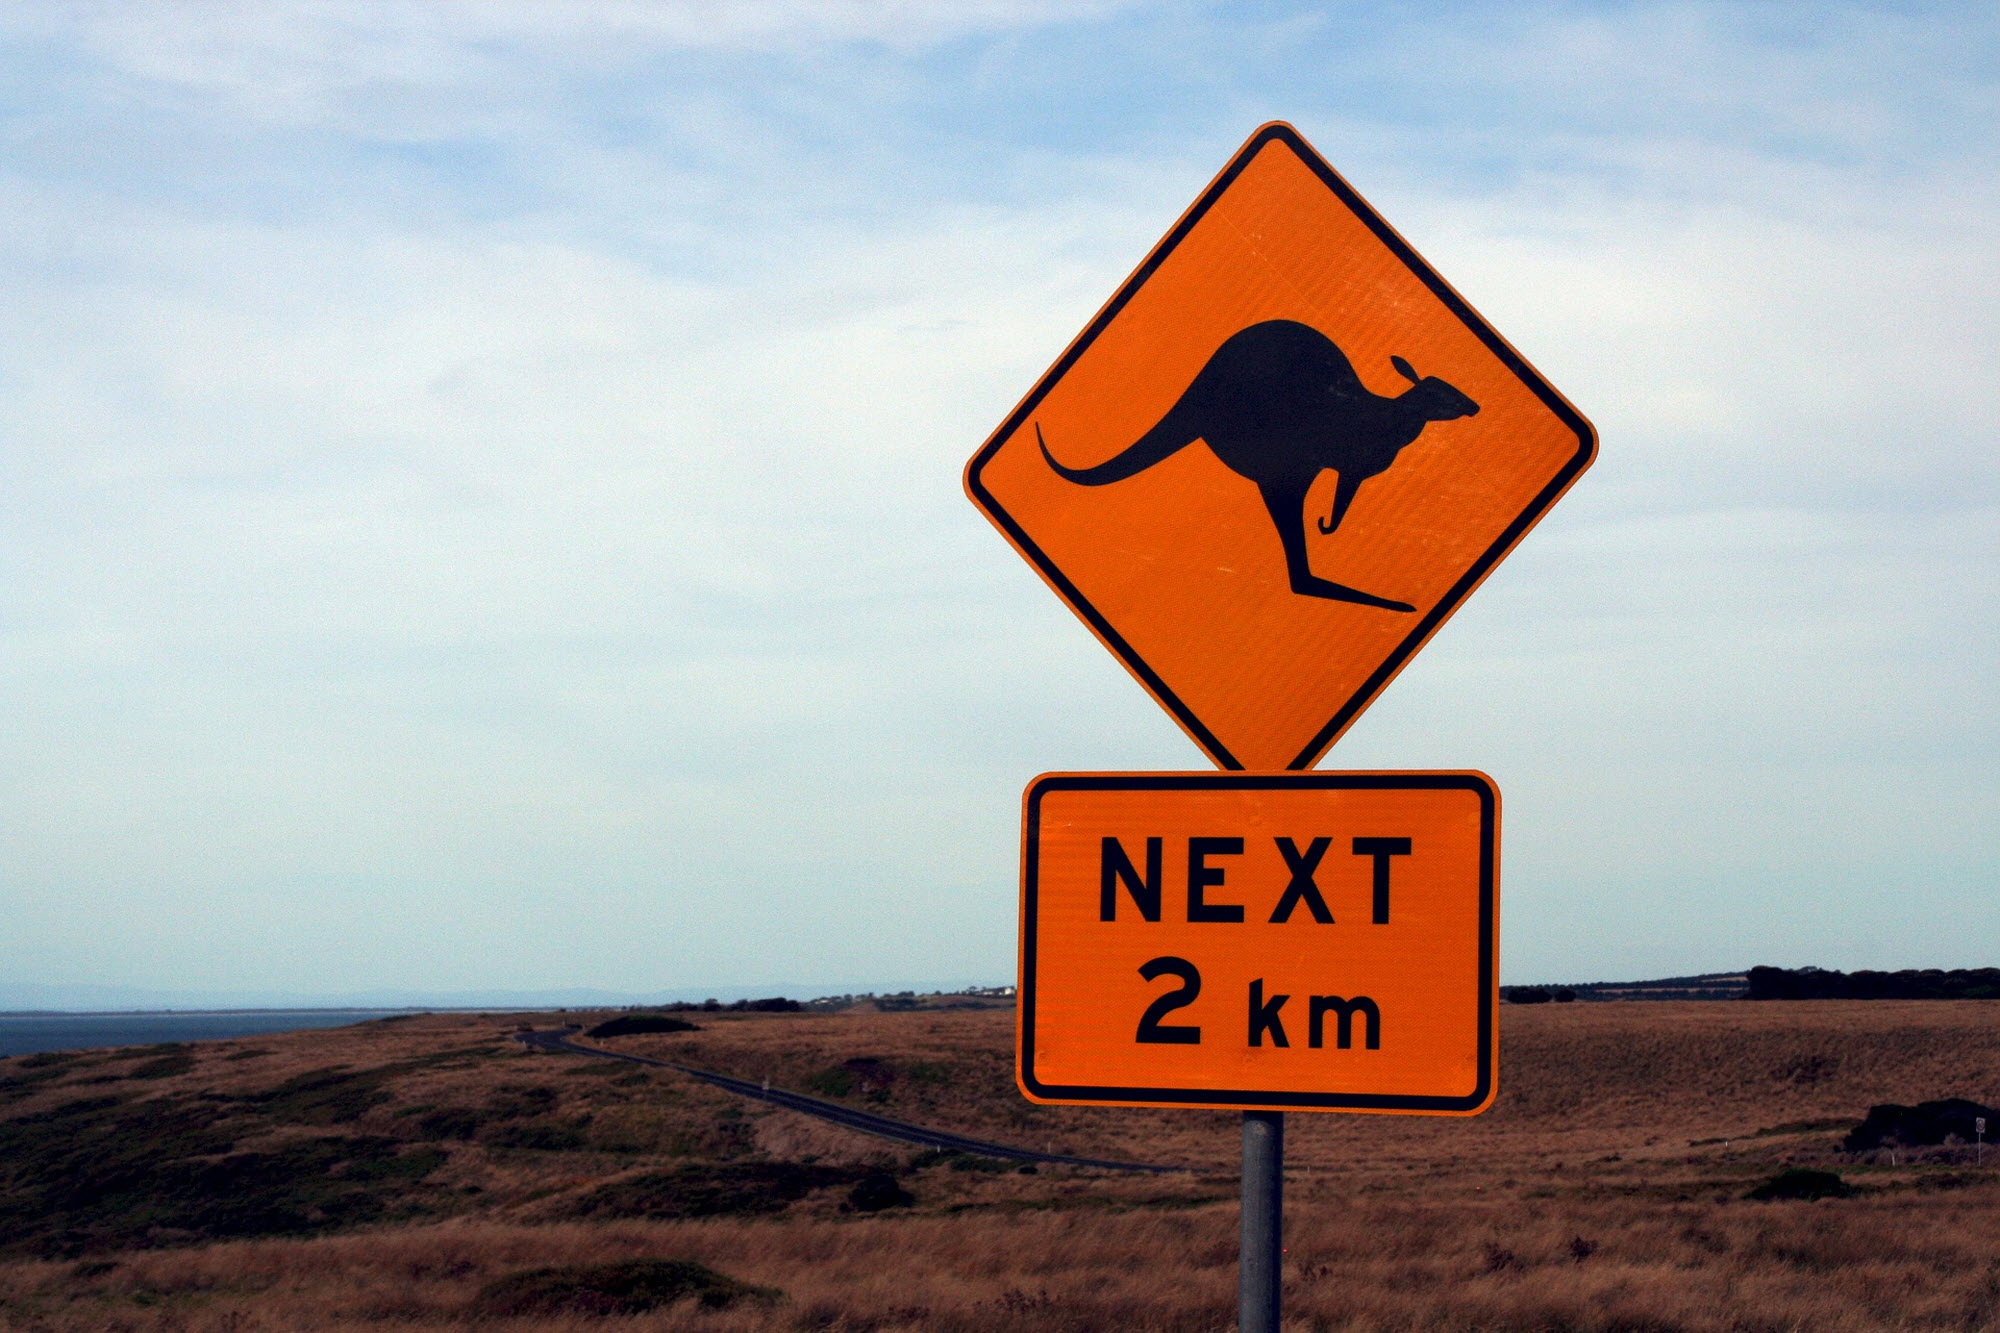 kangaroo sign